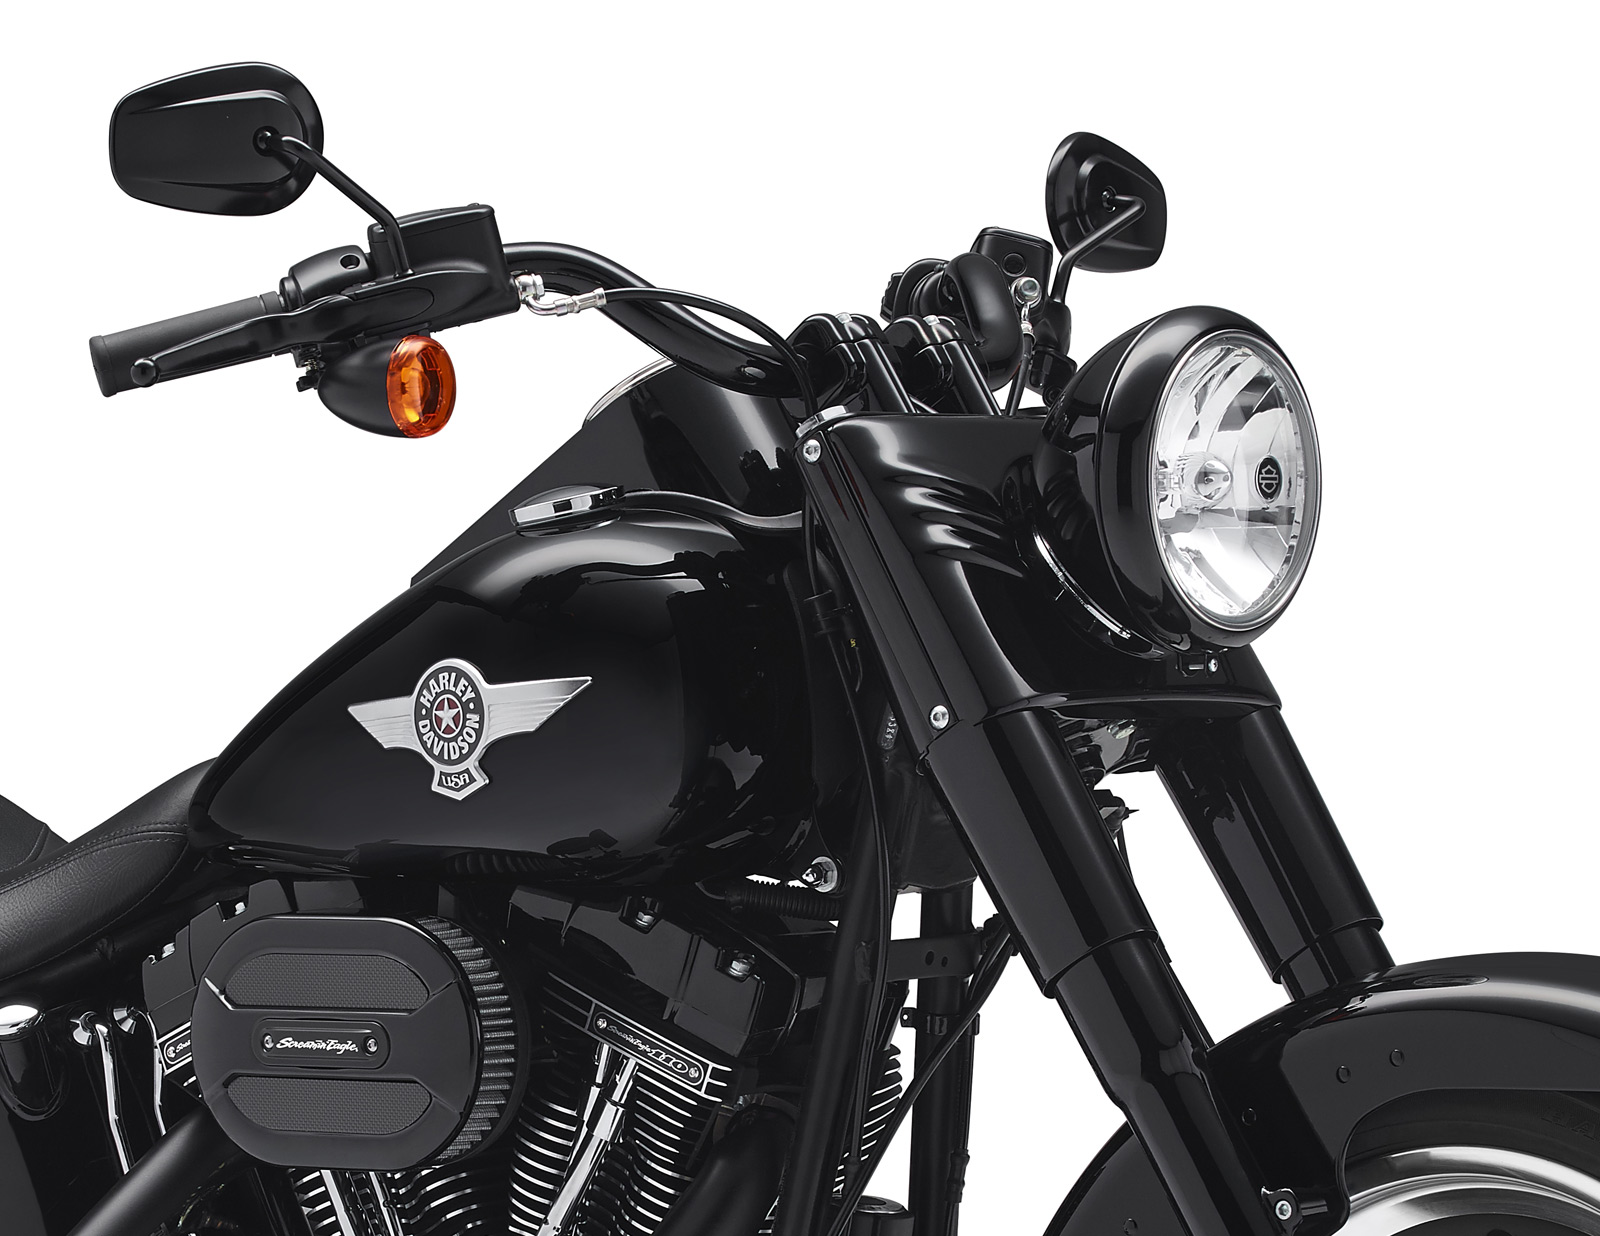 55800634a Harley Davidson H D Original Handlebar Gloss Black For Fat Boy S 16 17 At Thunderbike Shop